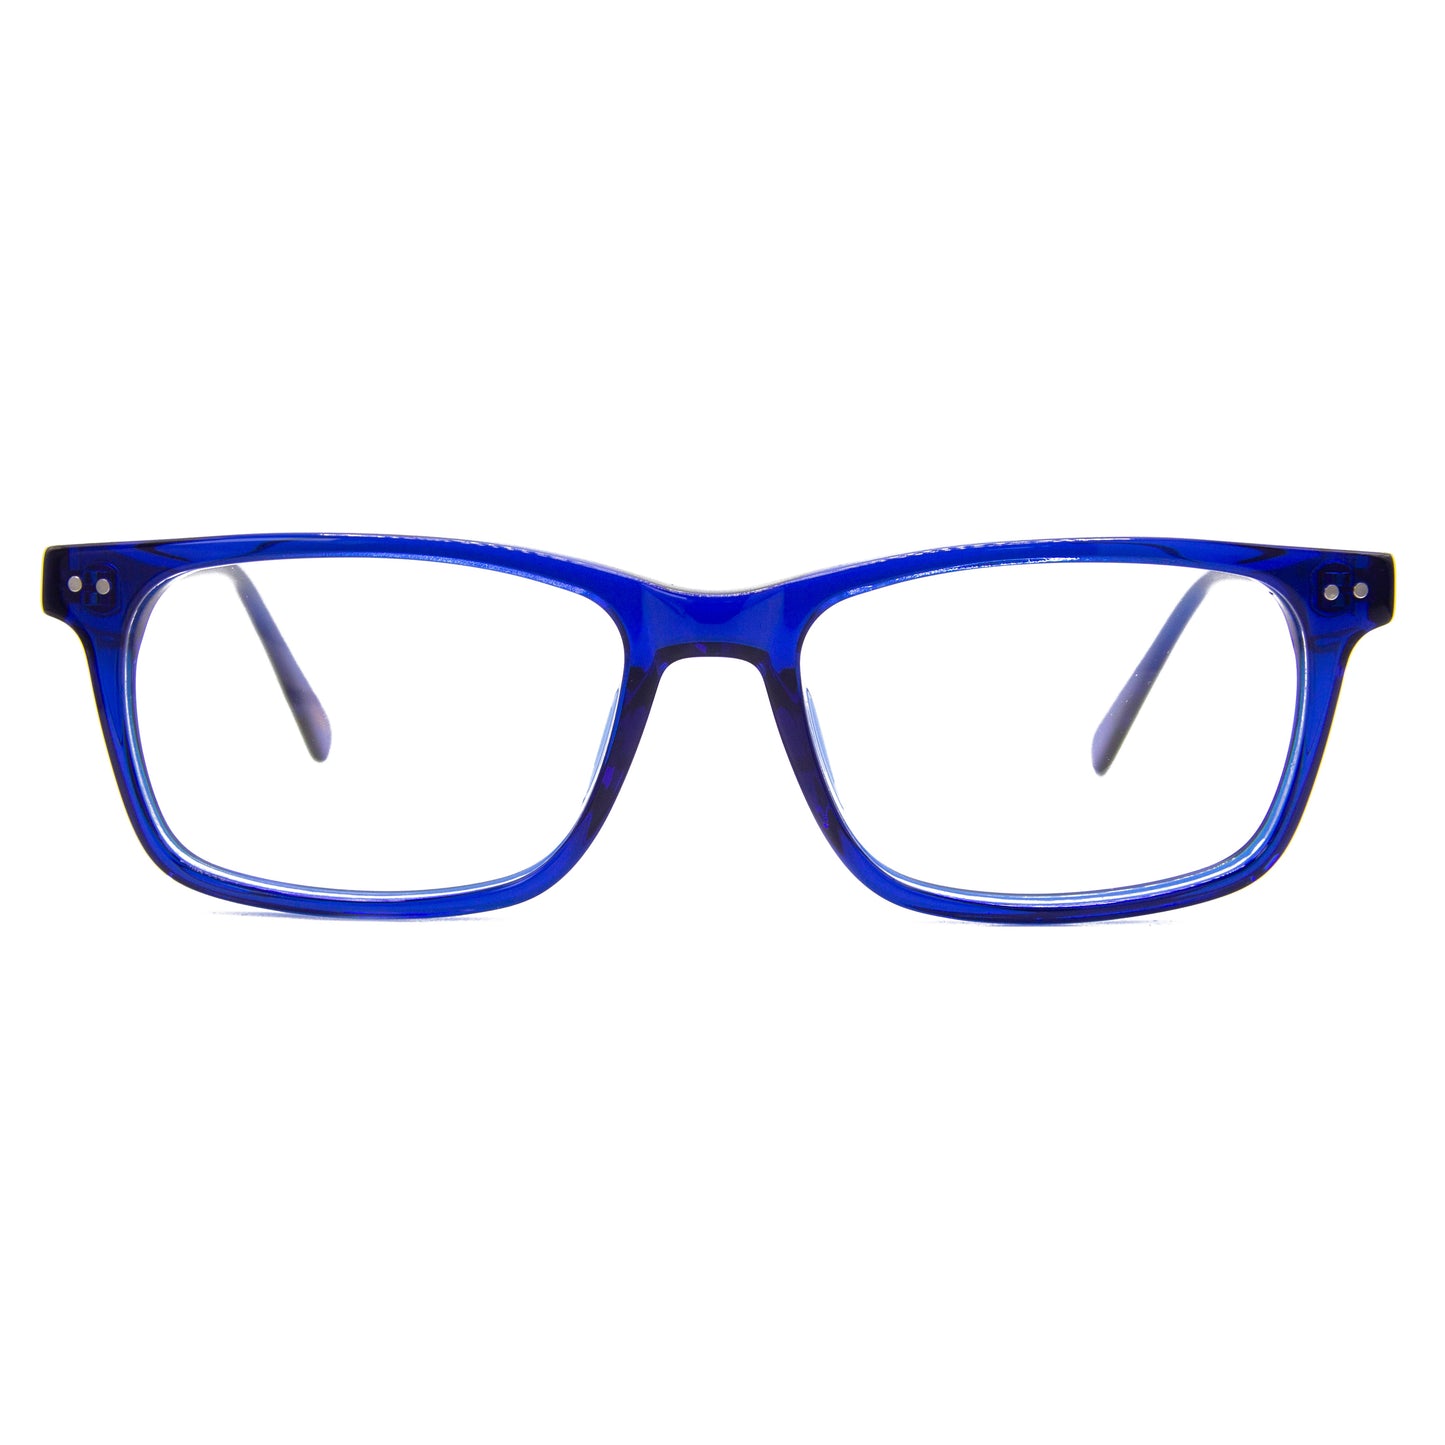 3 brothers - Mr Fred - Blue - Prescription Glasses